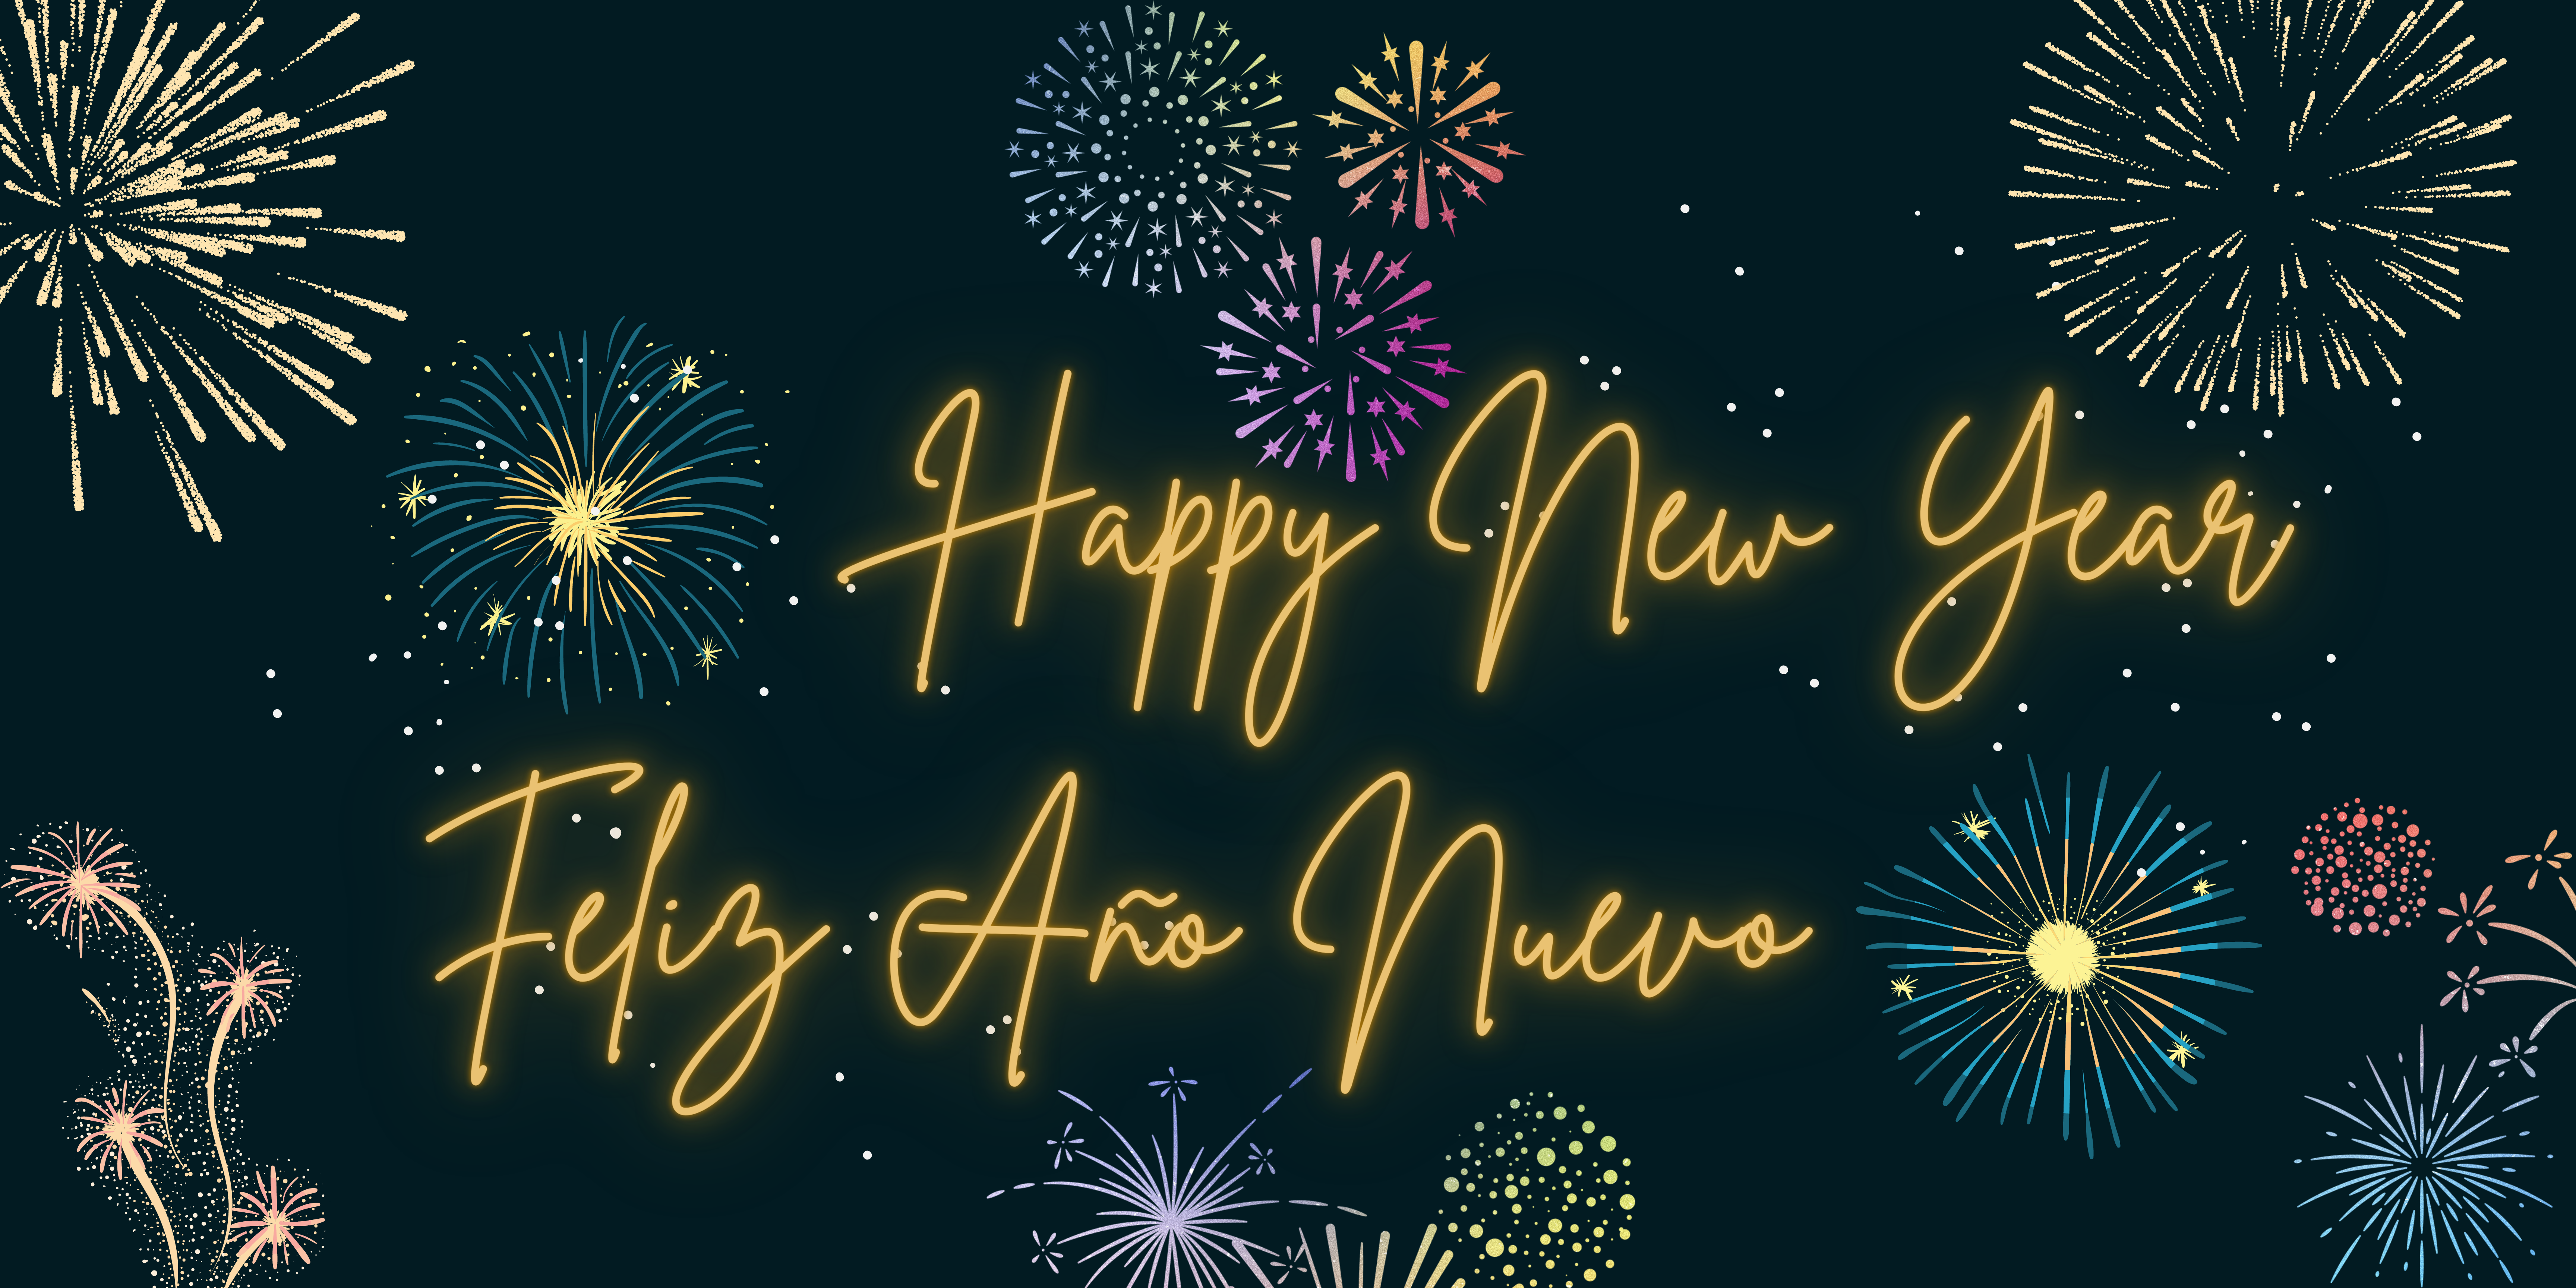 Black night sky background with fireworks exploding around the words "Happy New Year" and "Feliz Año Nuevo"